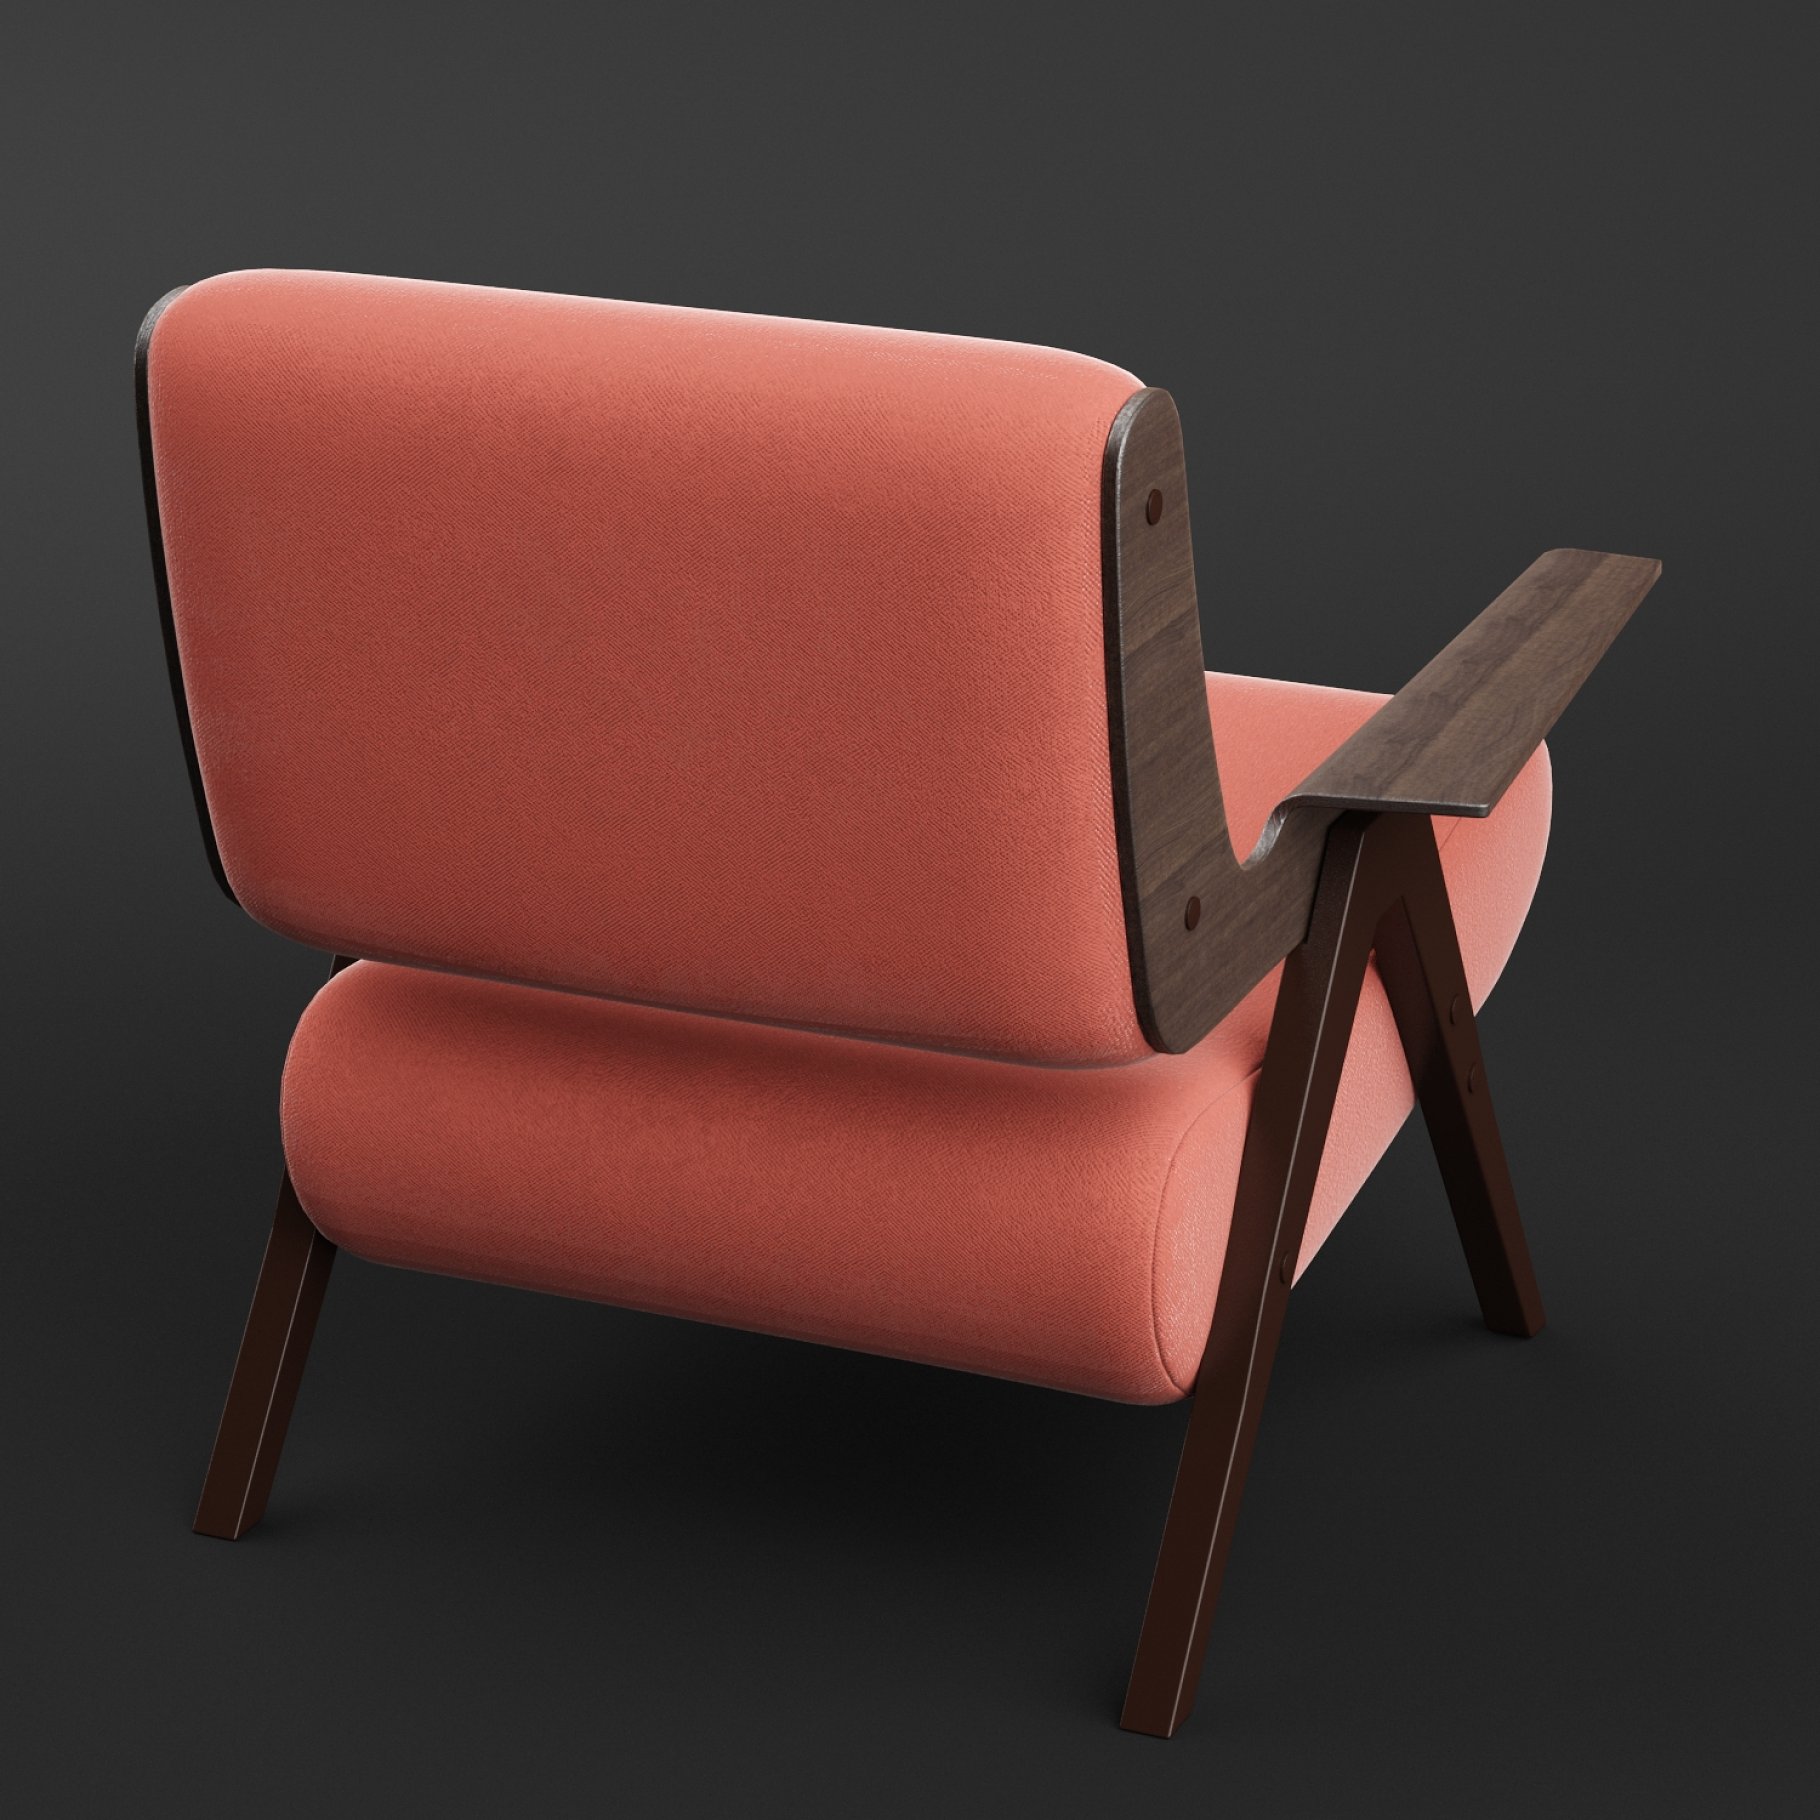 Beautiful pink armchairs volume model.